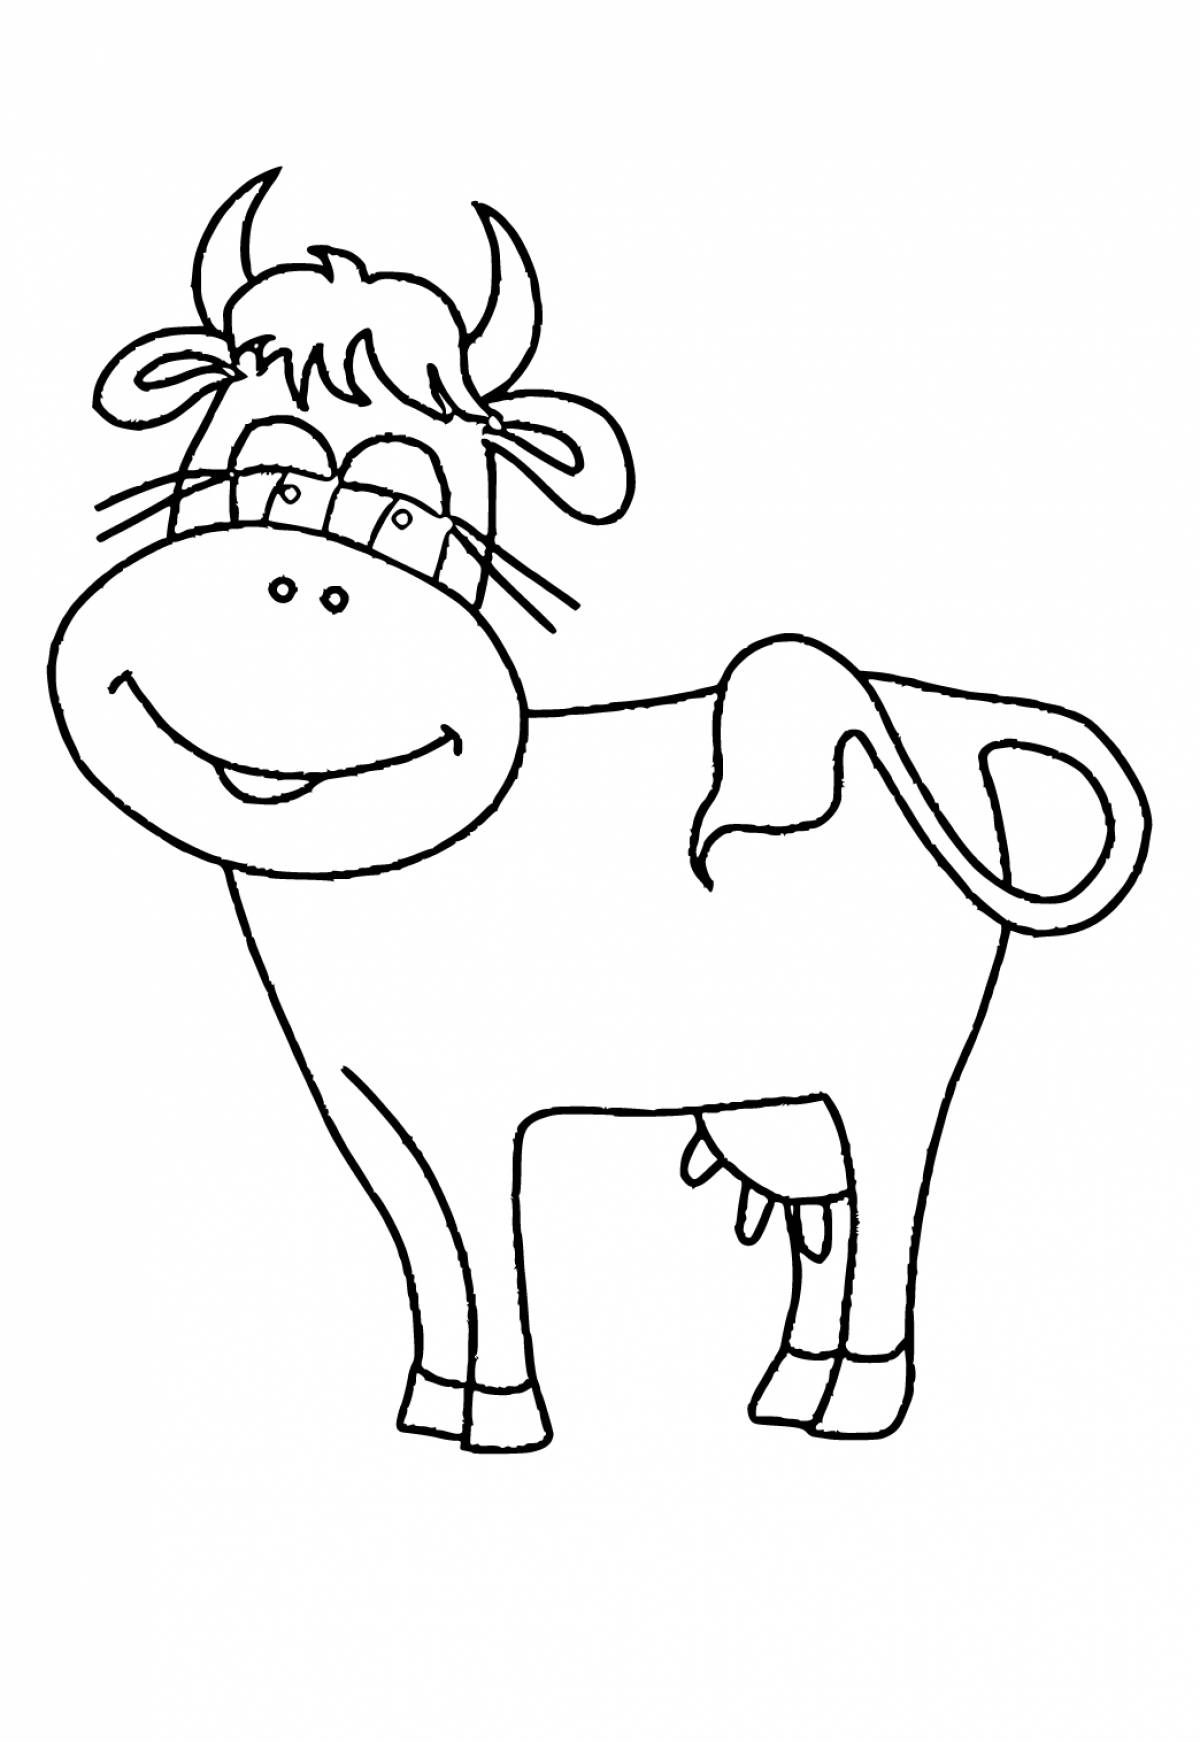 Забавная раскраска коровы для детей 5-6 лет